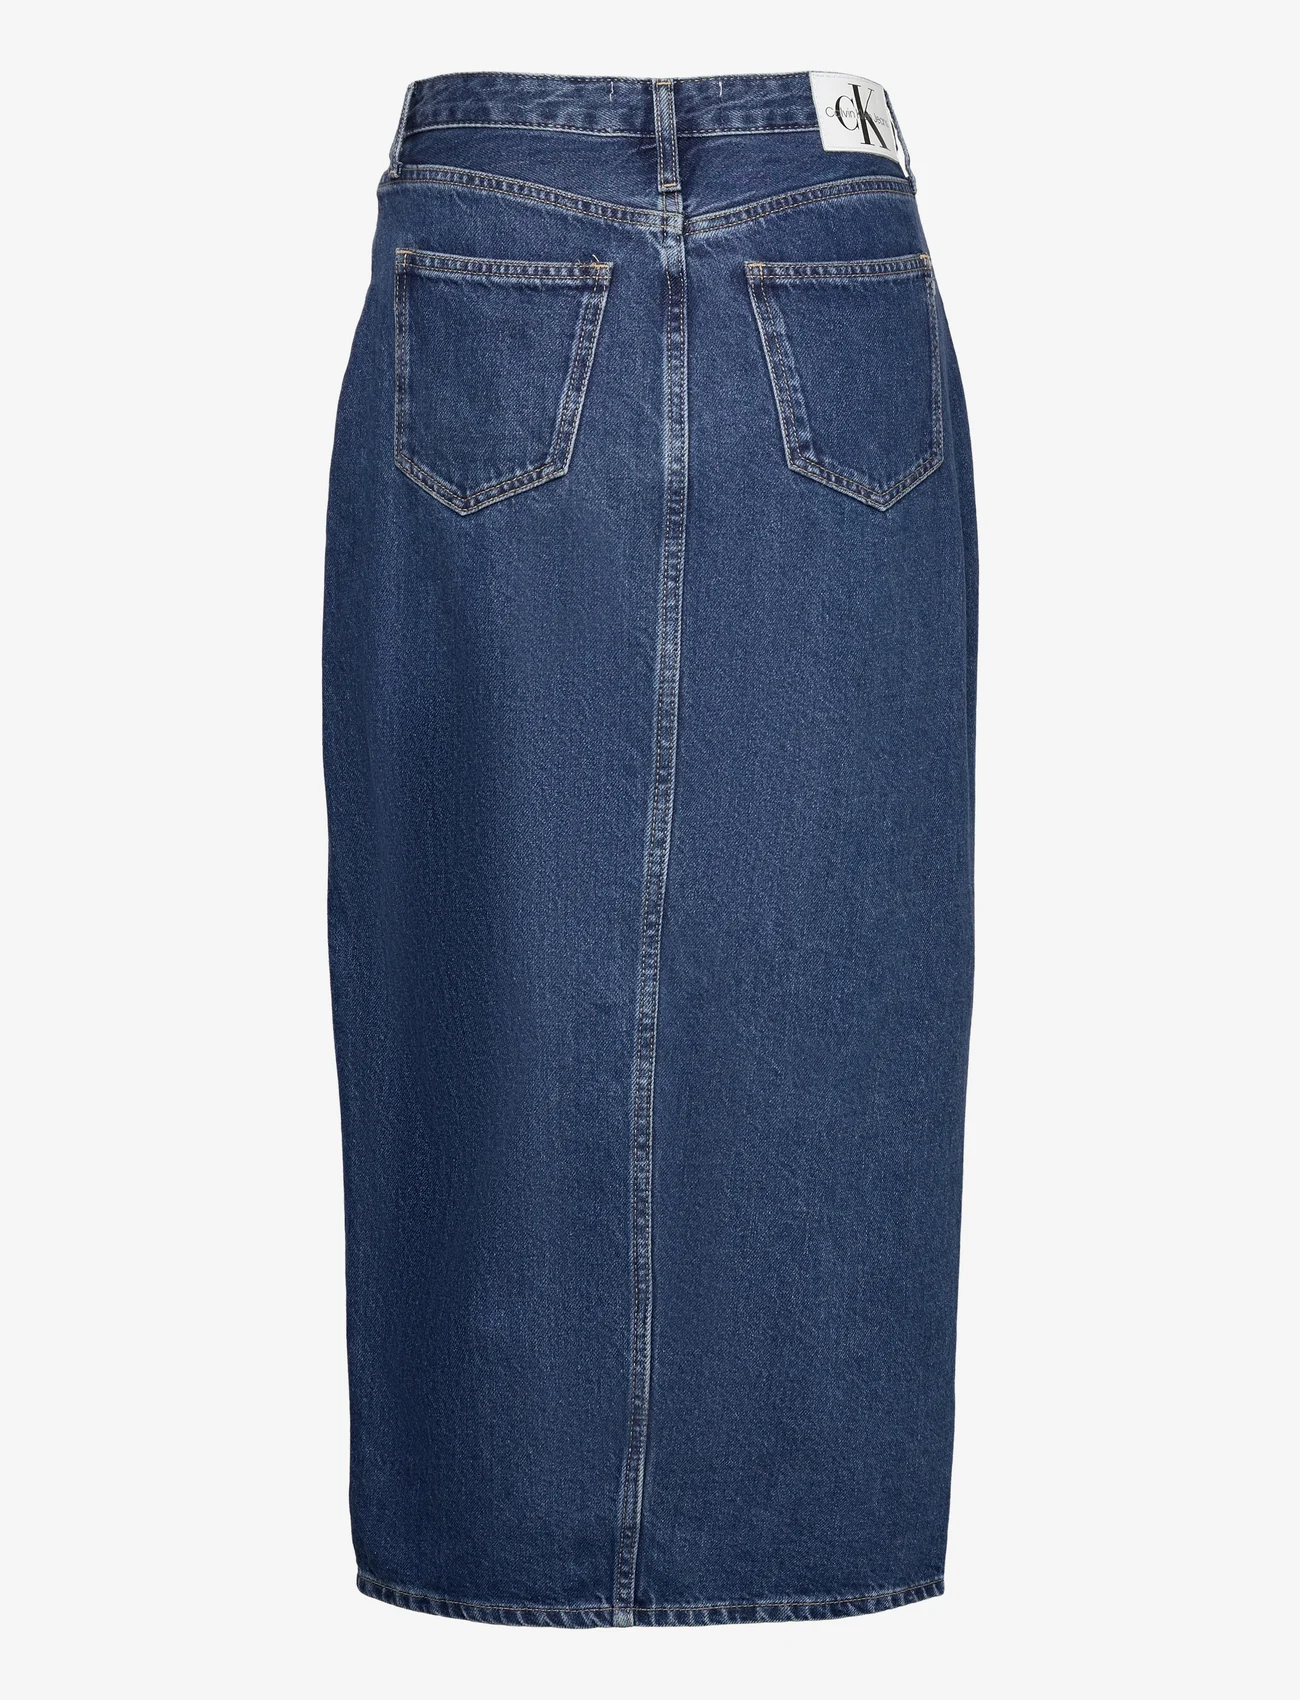 Calvin Klein Jeans - FRONT SPLIT MAXI DENIM SKIRT - maxi skirts - denim dark - 1